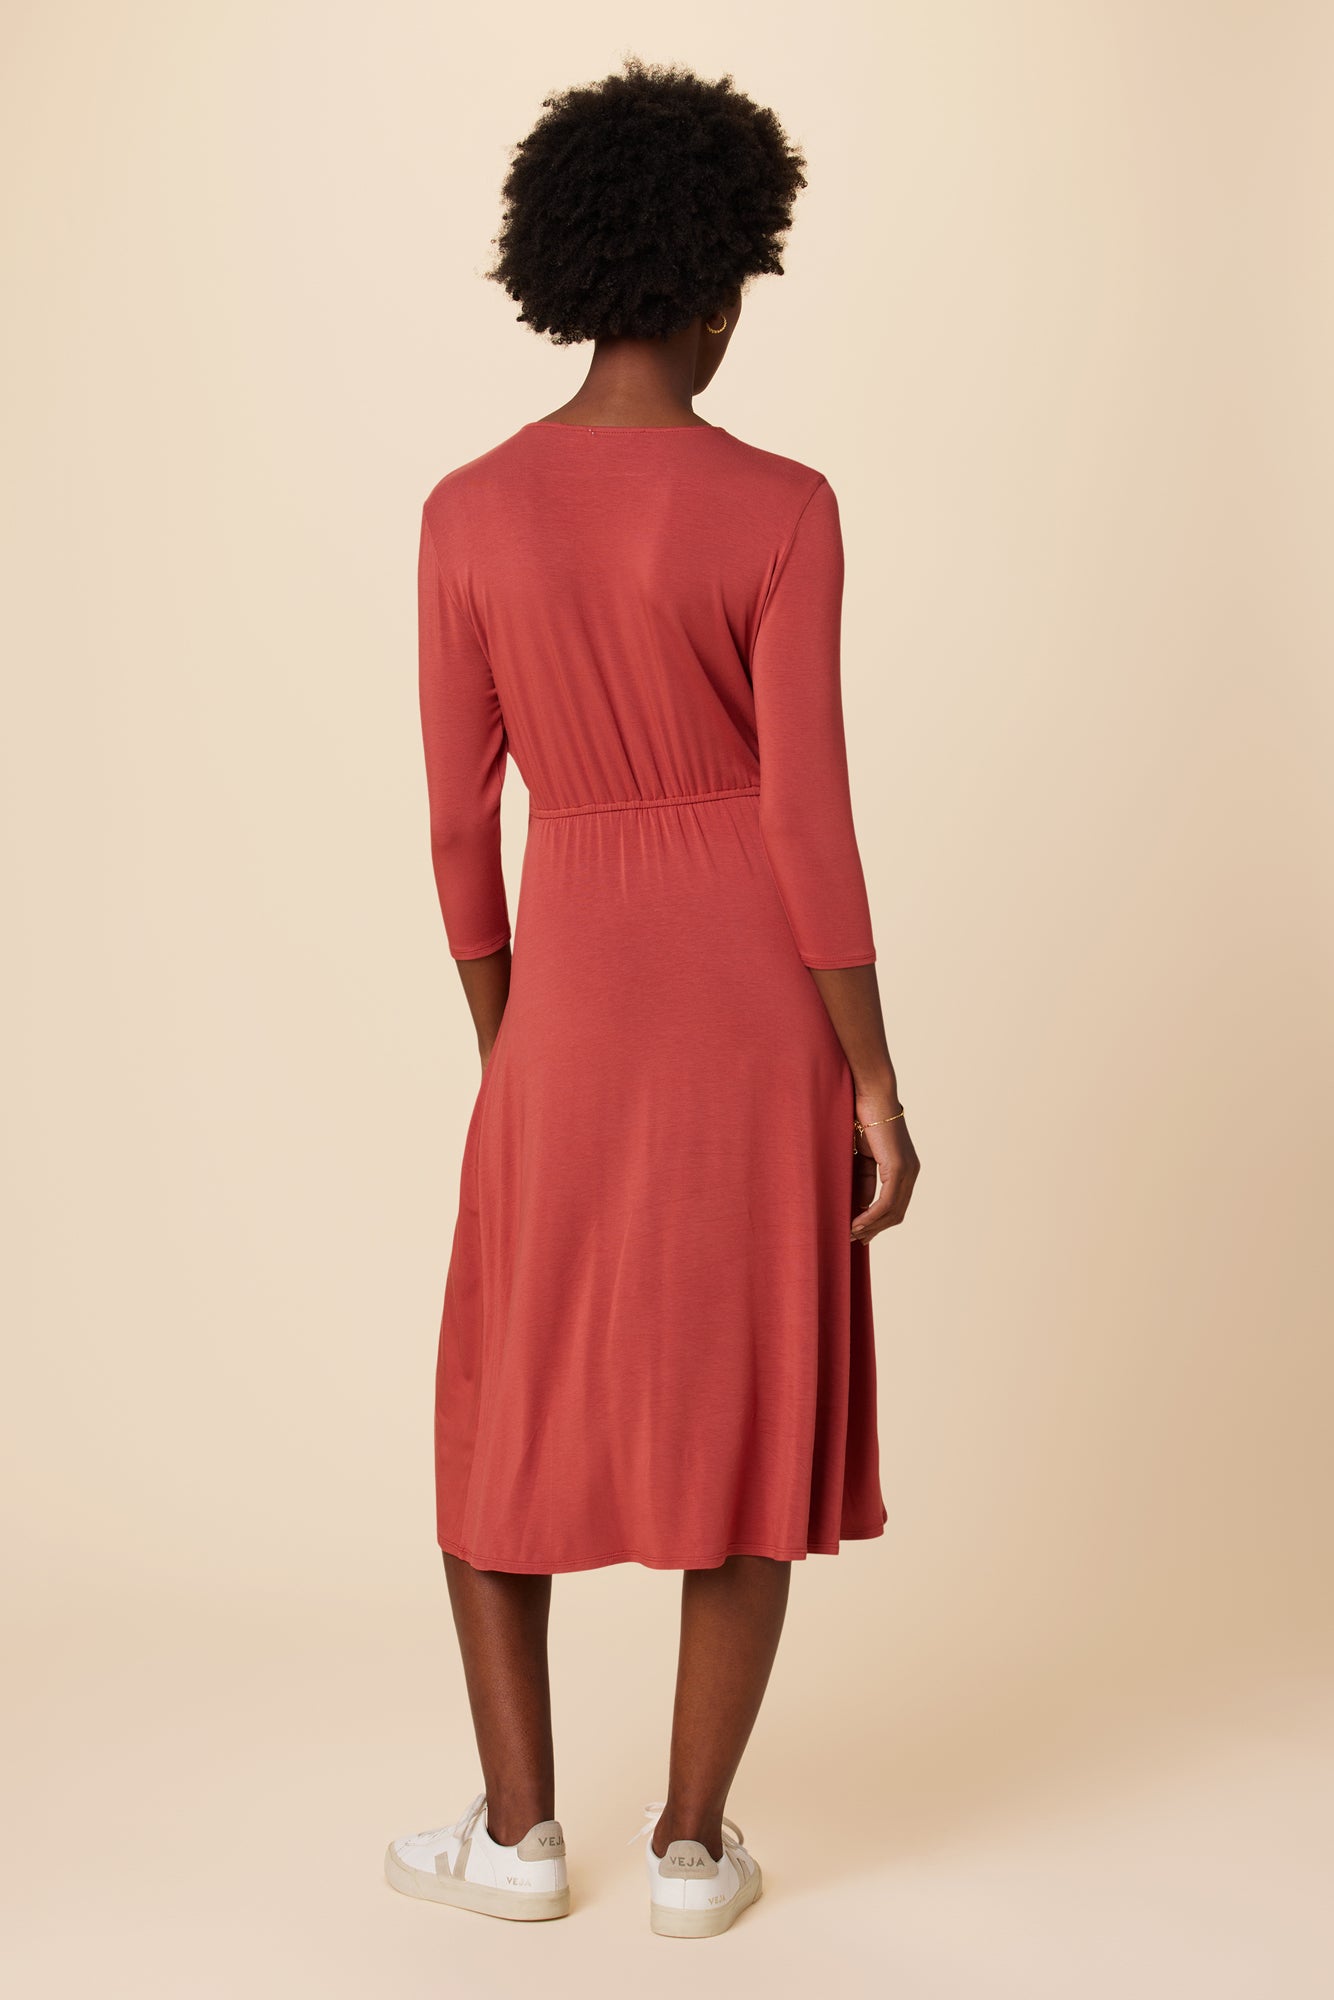 Olive 3/4 Sleeve Dream Knit Dress - Sienna